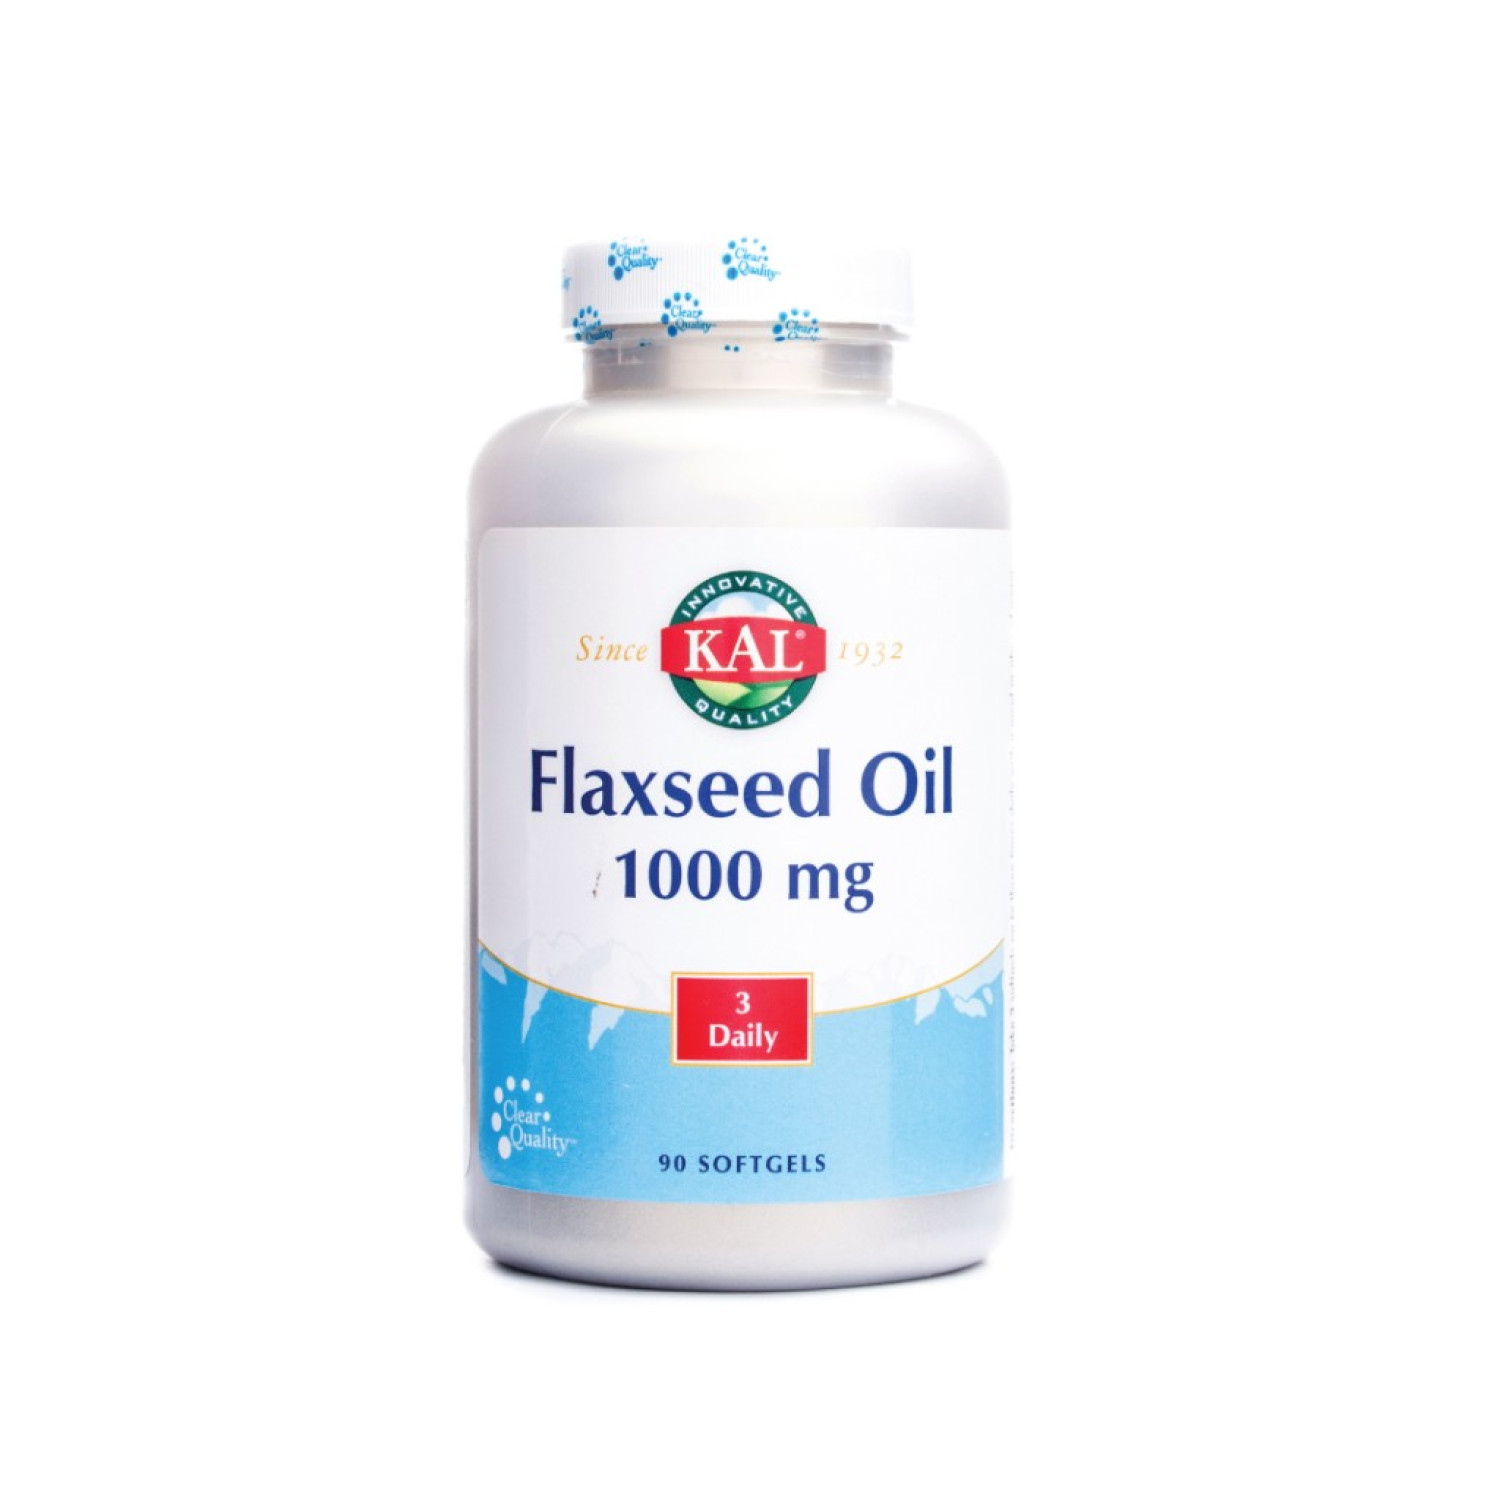 kal-flaxseed-oil-90-softgels-exp-date-0224-65434a022cd2d.jpeg